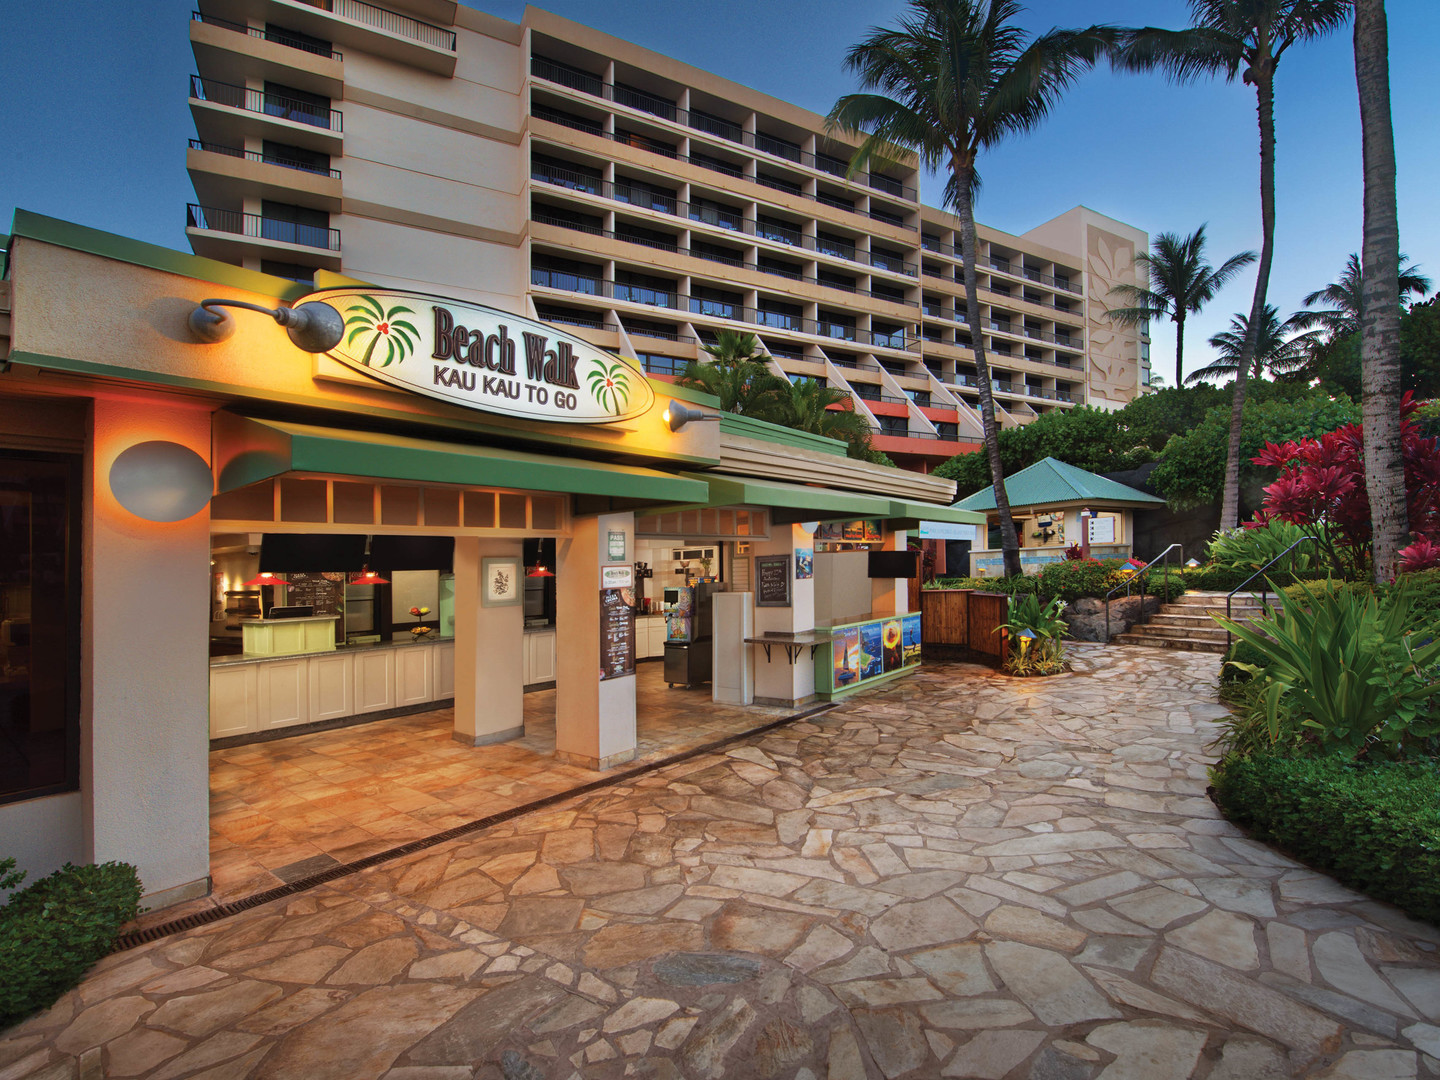 Marriott's Maui Ocean Club - Molokai, Maui, and Lanai Towers Beach Walk Kau Kau To Go. Marriott's Maui Ocean Club - Molokai, Maui, and Lanai Towers is located in Lāhainā, Maui, Hawai‘i United States.